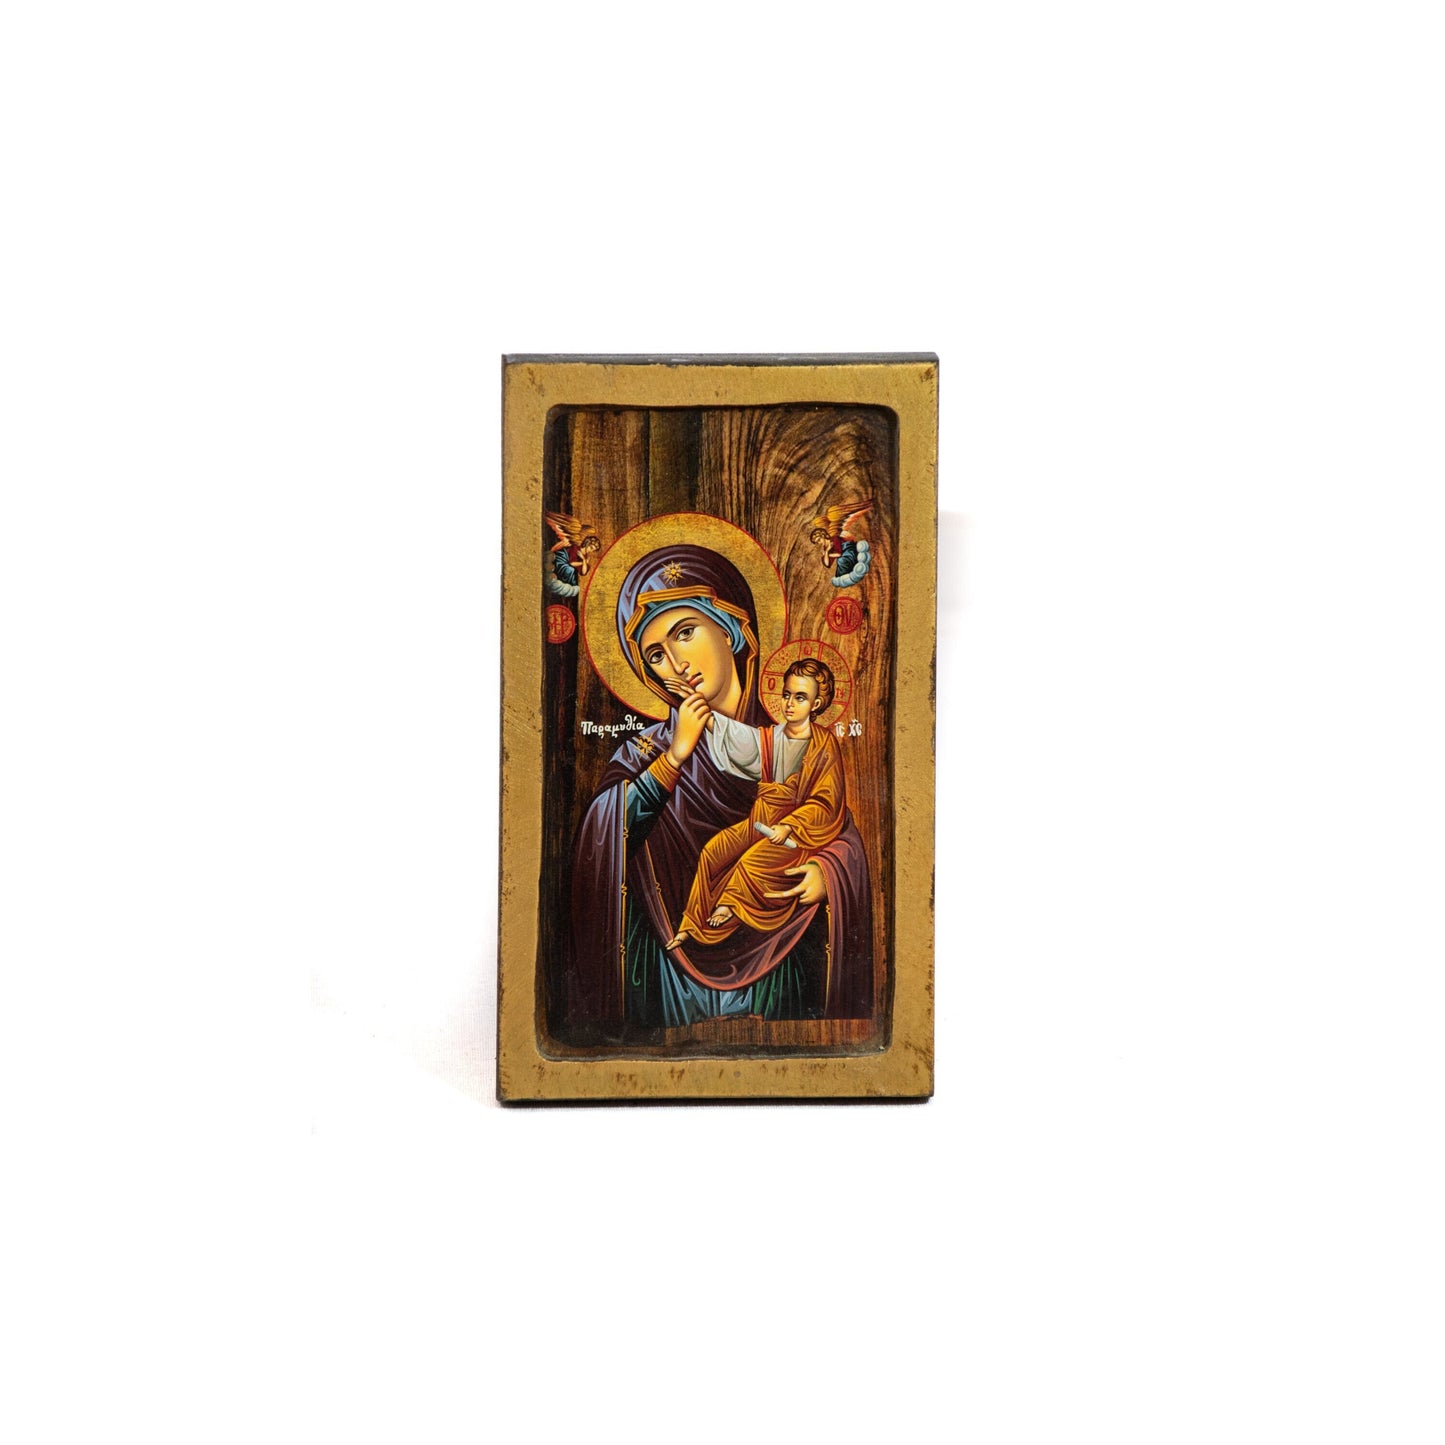 Virgin Mary icon Paramythia, Handmade Greek Orthodox Icon, Mother of God Byzantine art wall hanging, Theotokos wood plaque 23x14cm TheHolyArt